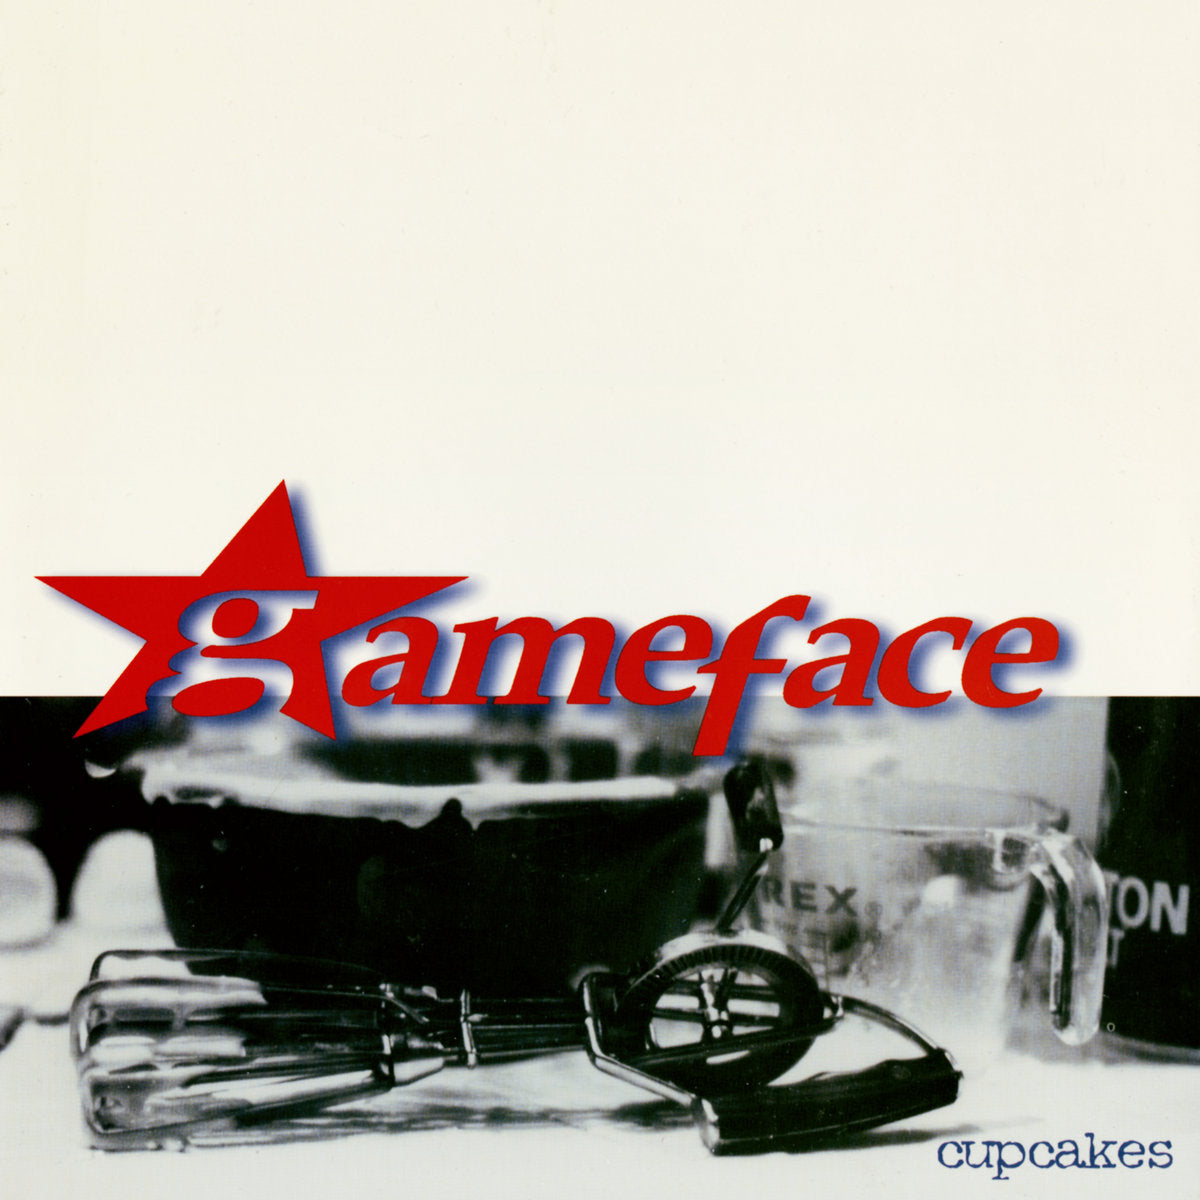 Gameface "Cupcakes" 12" Vinyl